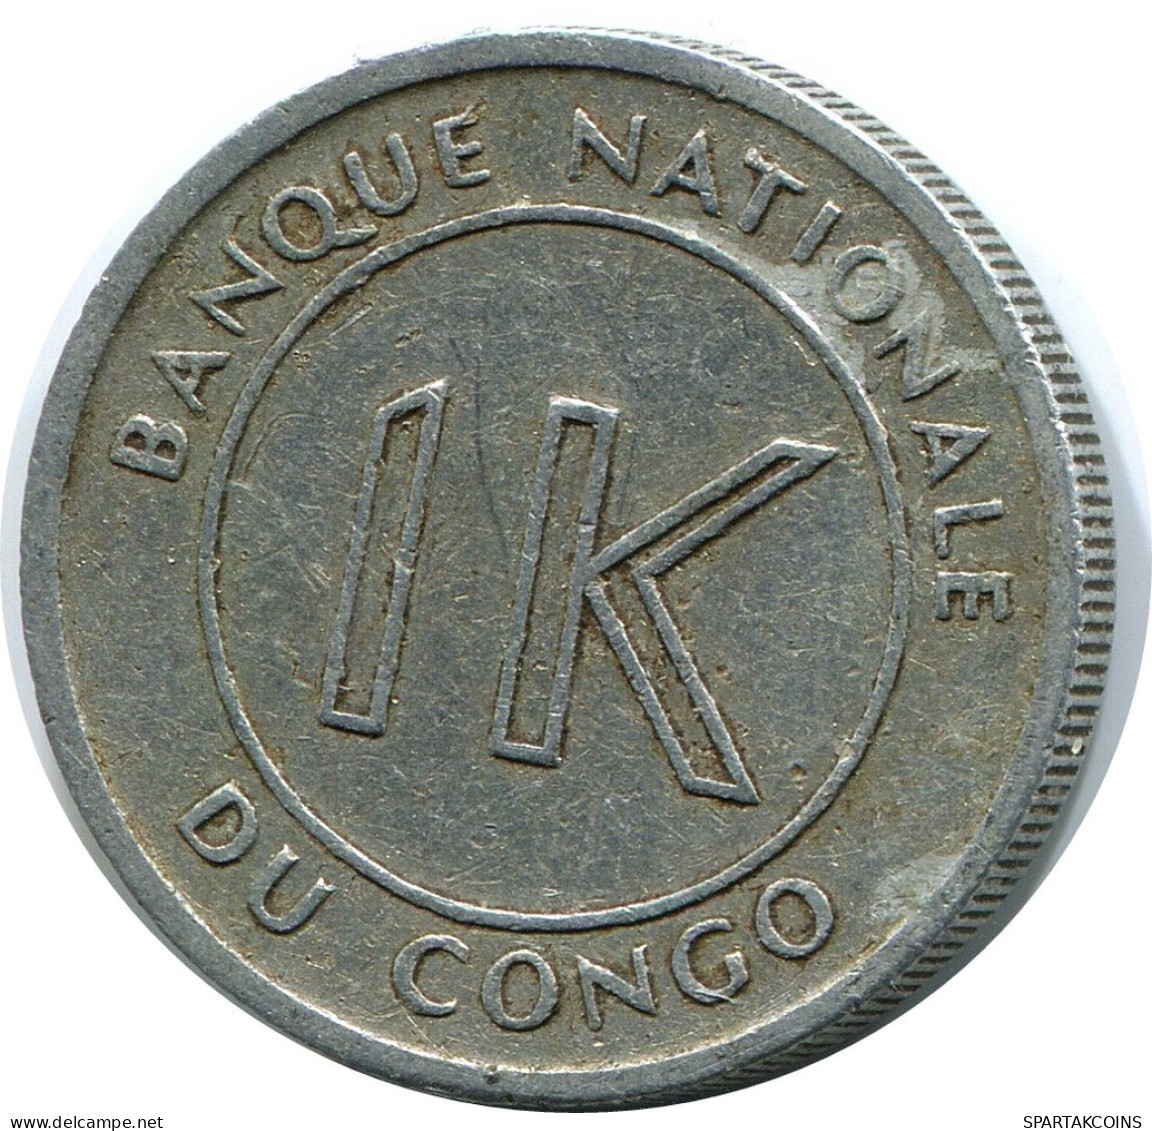 1 LIKUTA 1967 KONGO CONGO Münze #AP853.D.A - Congo (Rép. Démocratique, 1964-70)